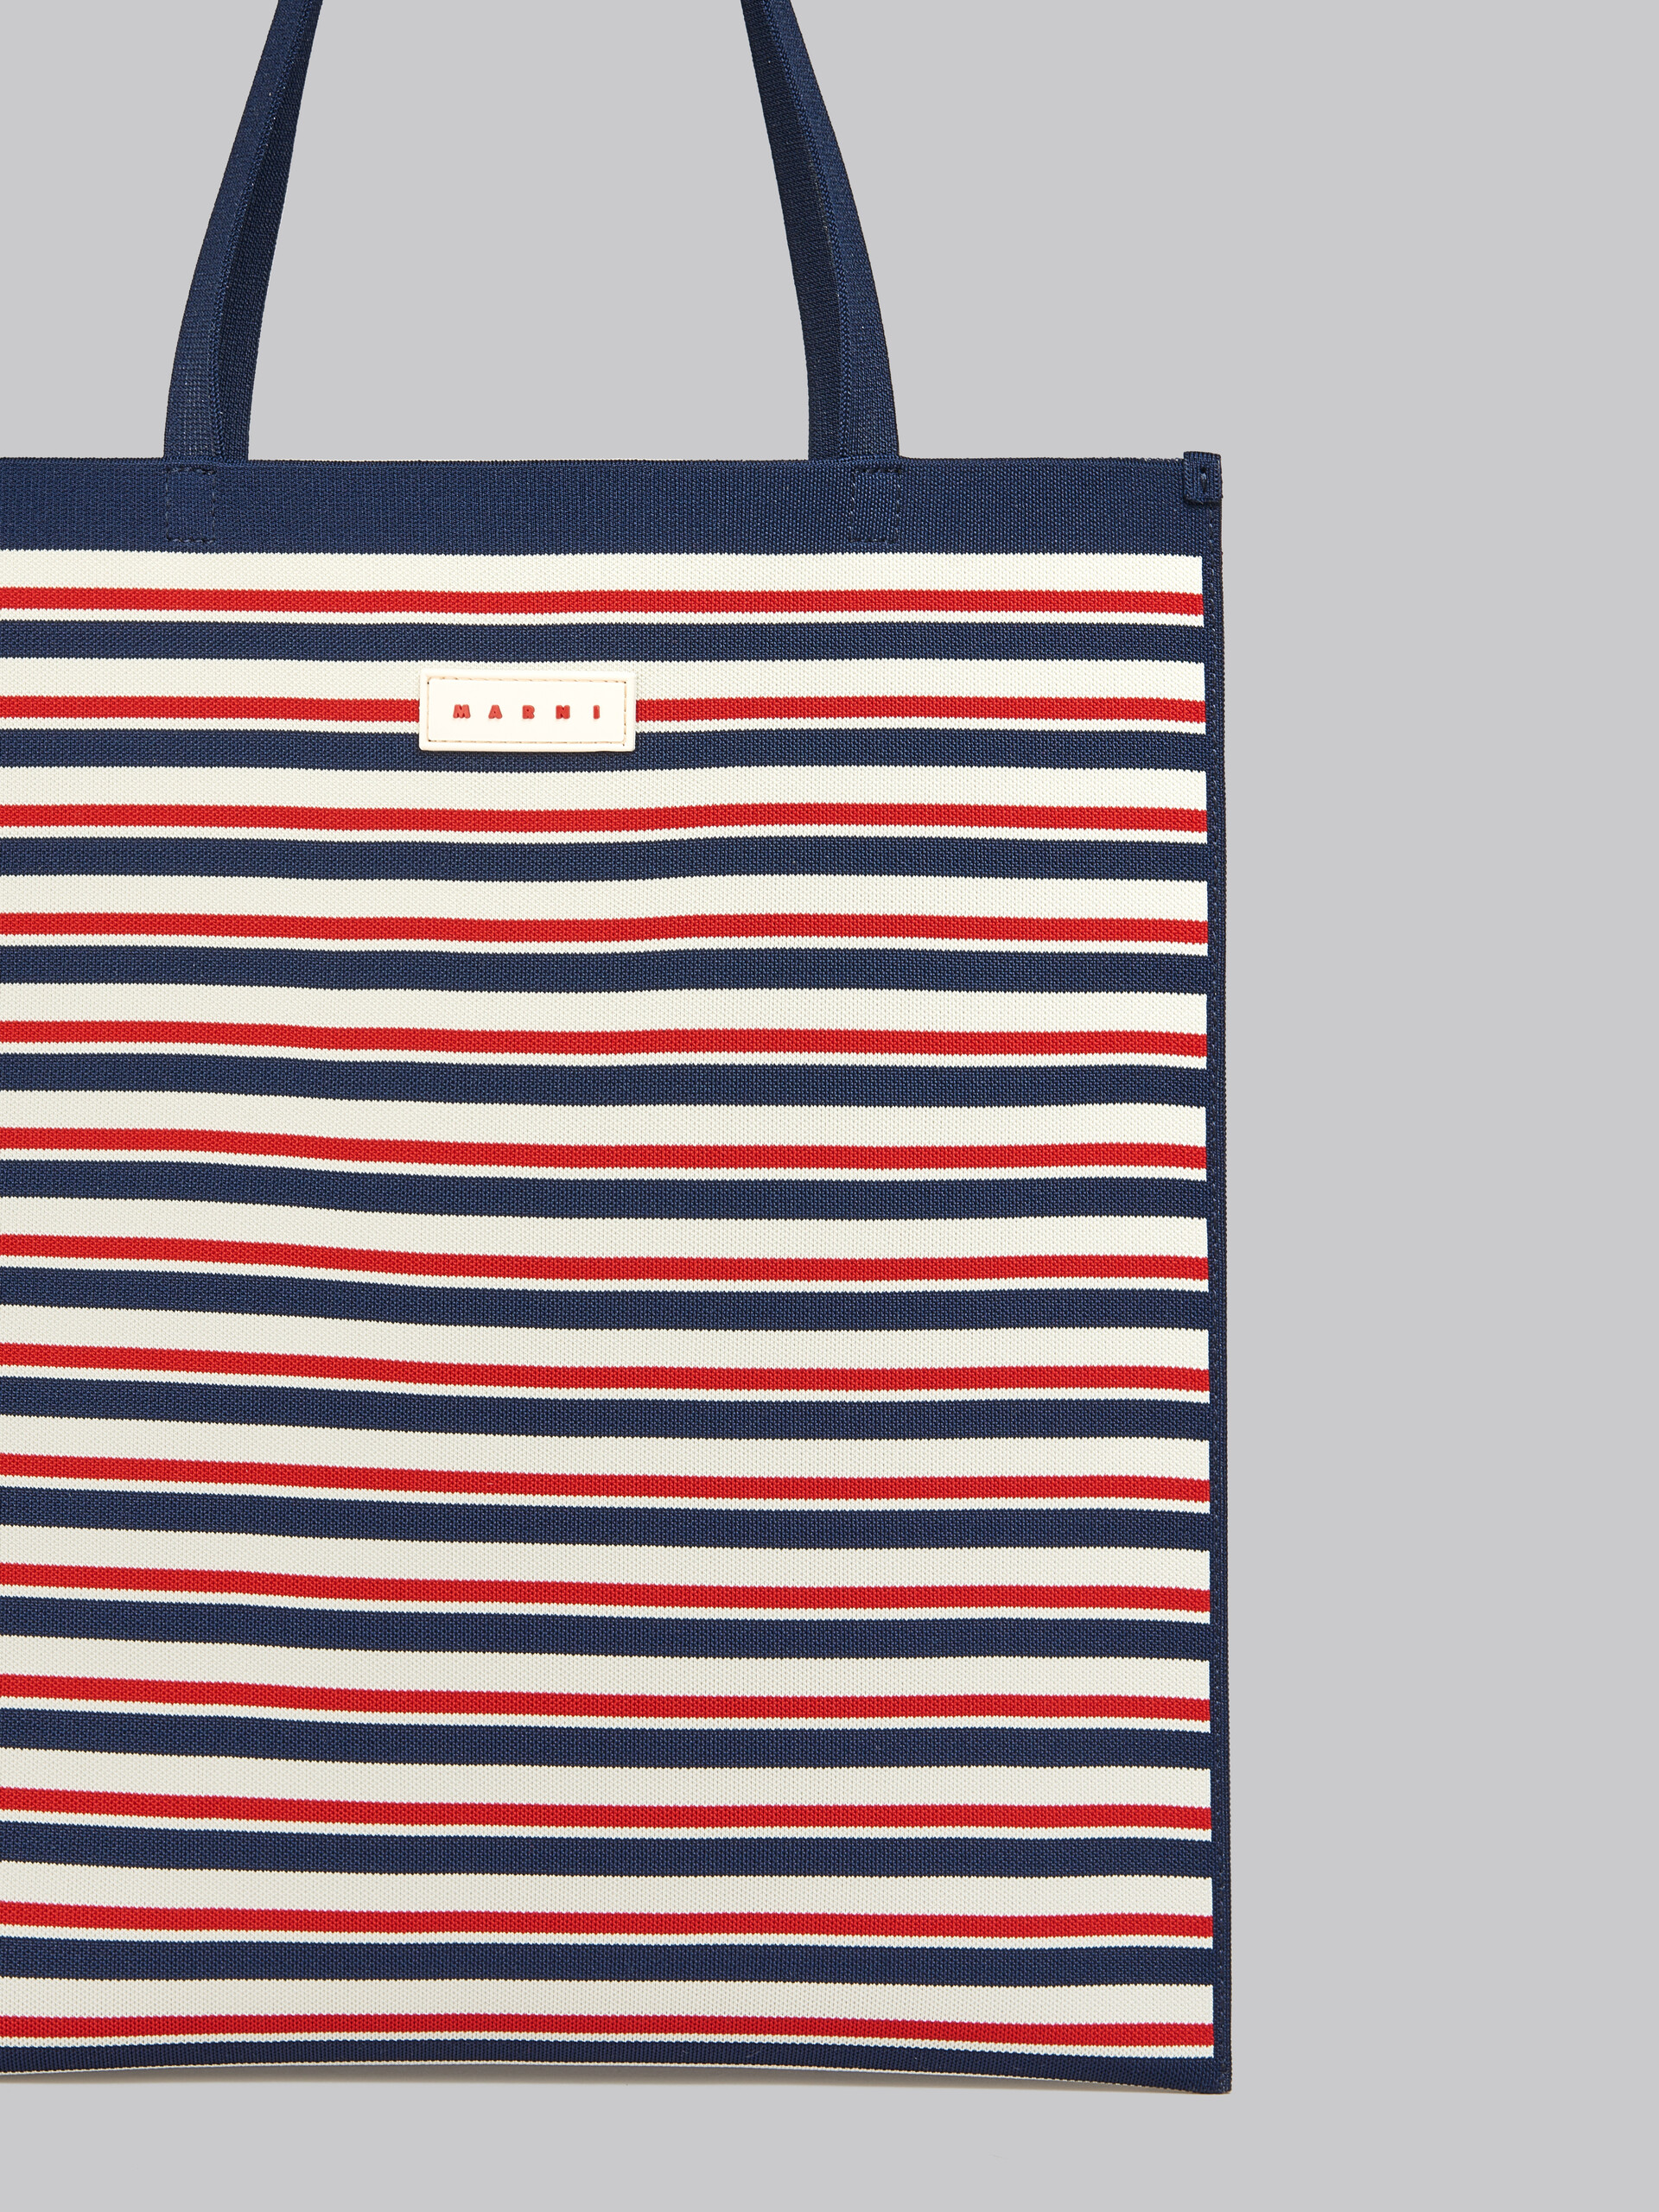 Bolso tote plano de jacquard a rayas azul marino, blanco y rojo - Bolsos shopper - Image 5